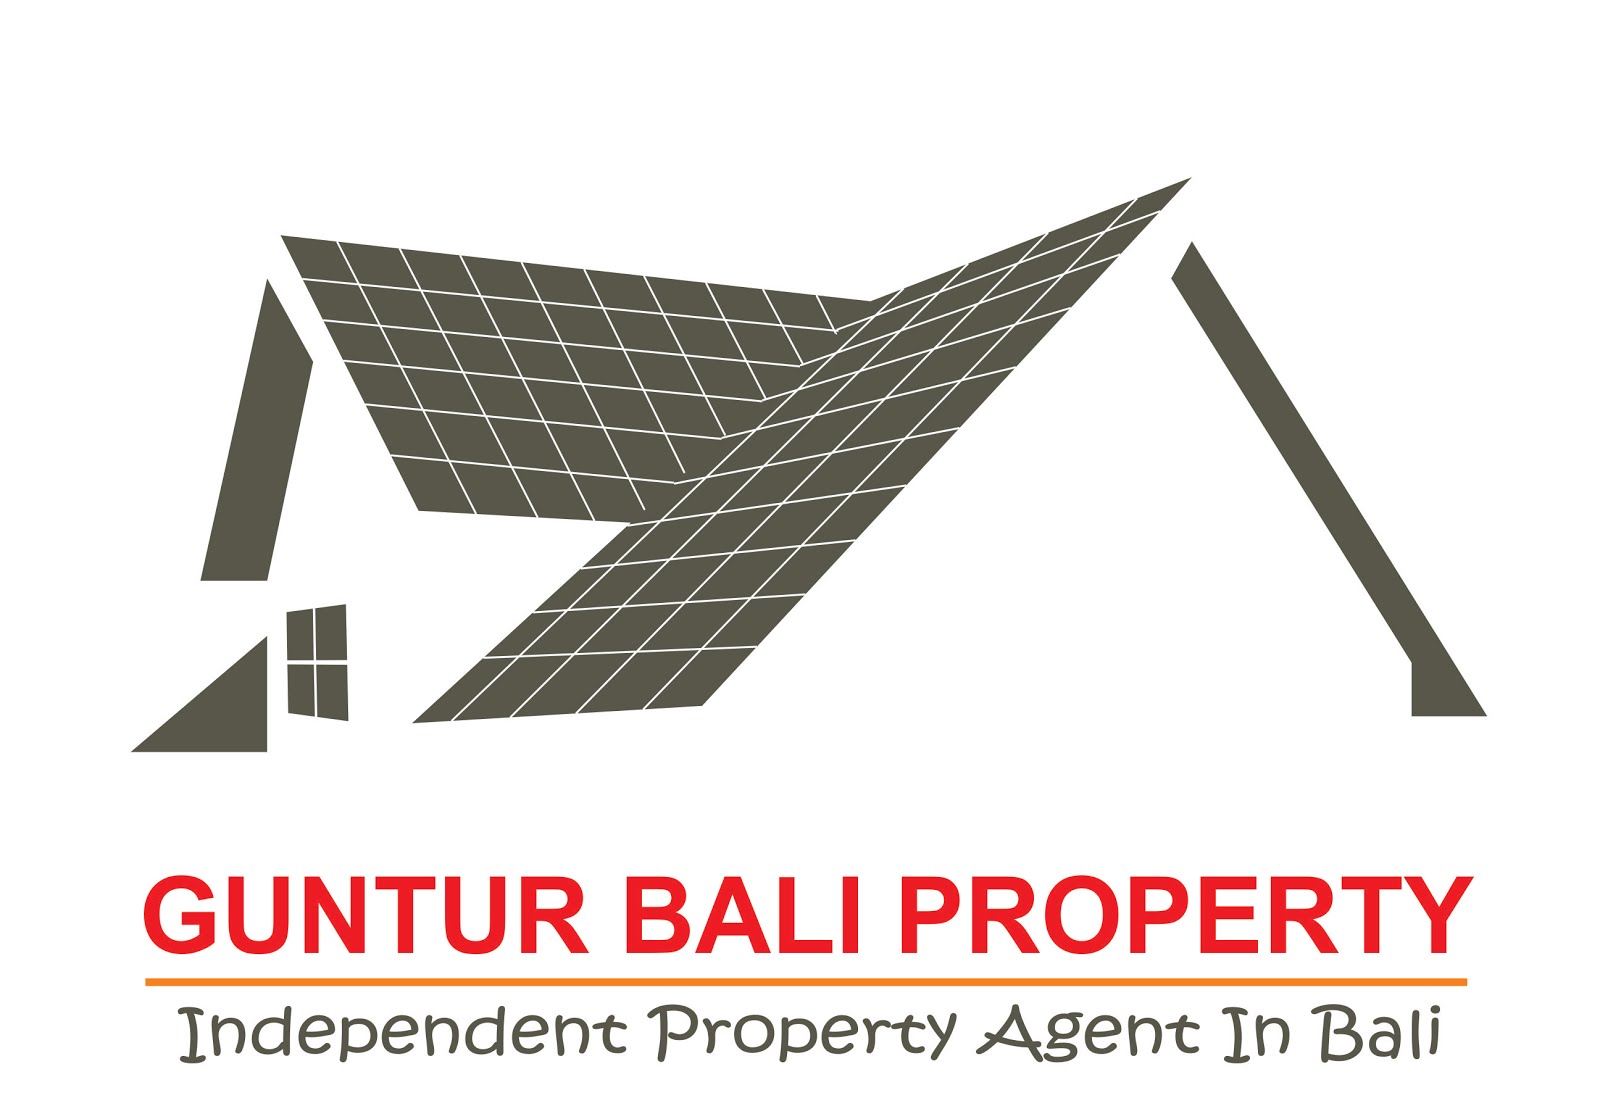 AGENT PROPERTY BALI